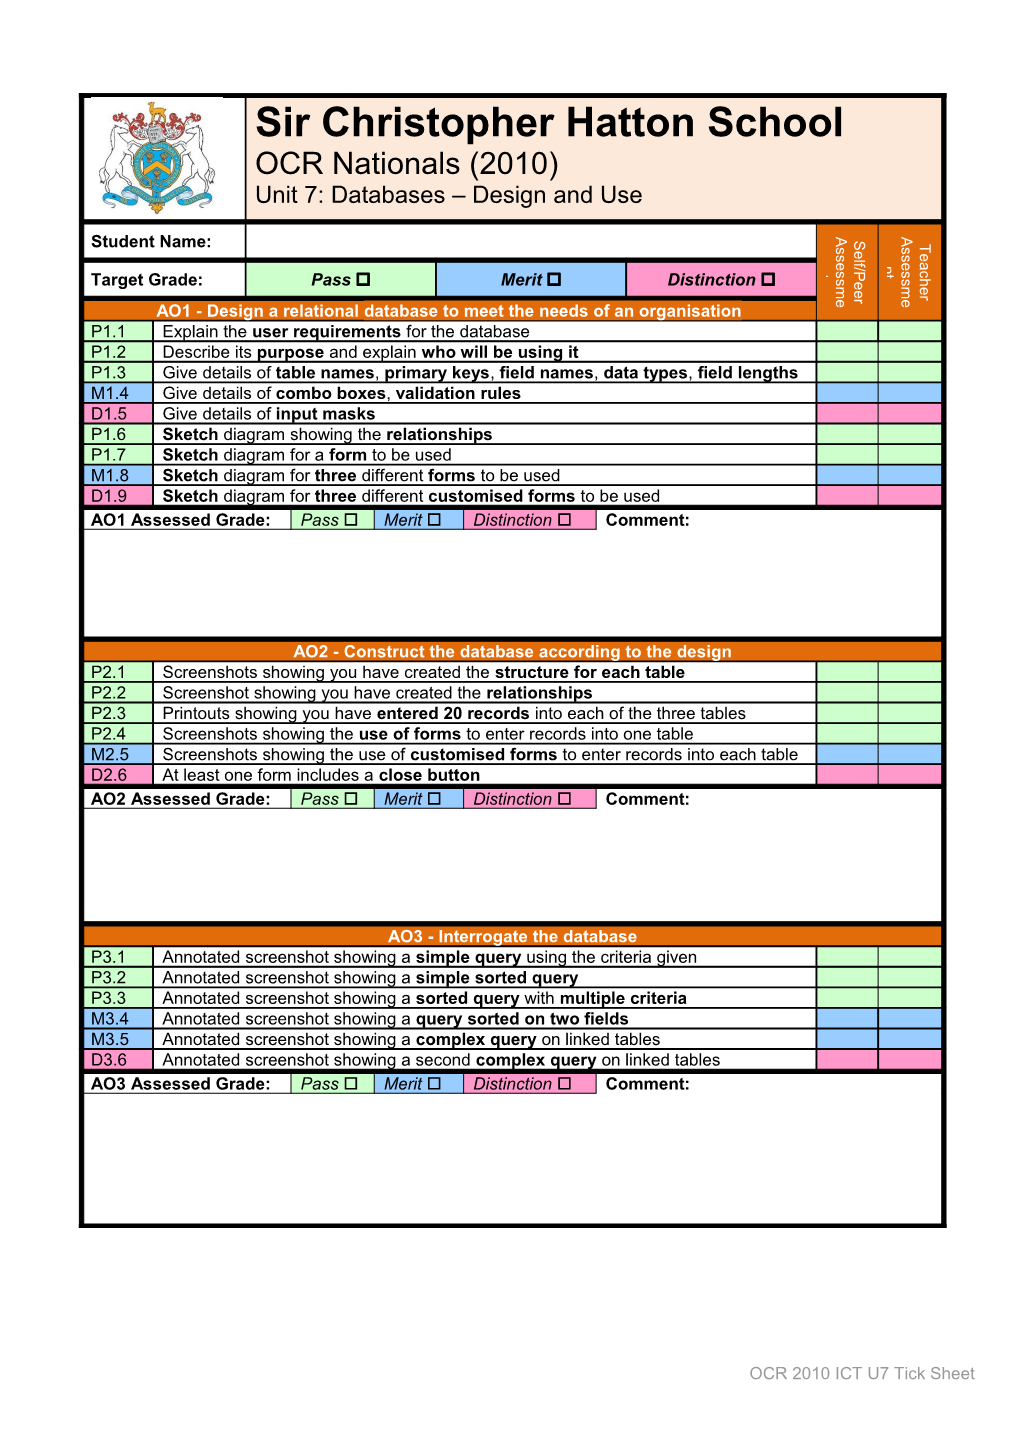 OCR 2010 ICT U7 Tick Sheet